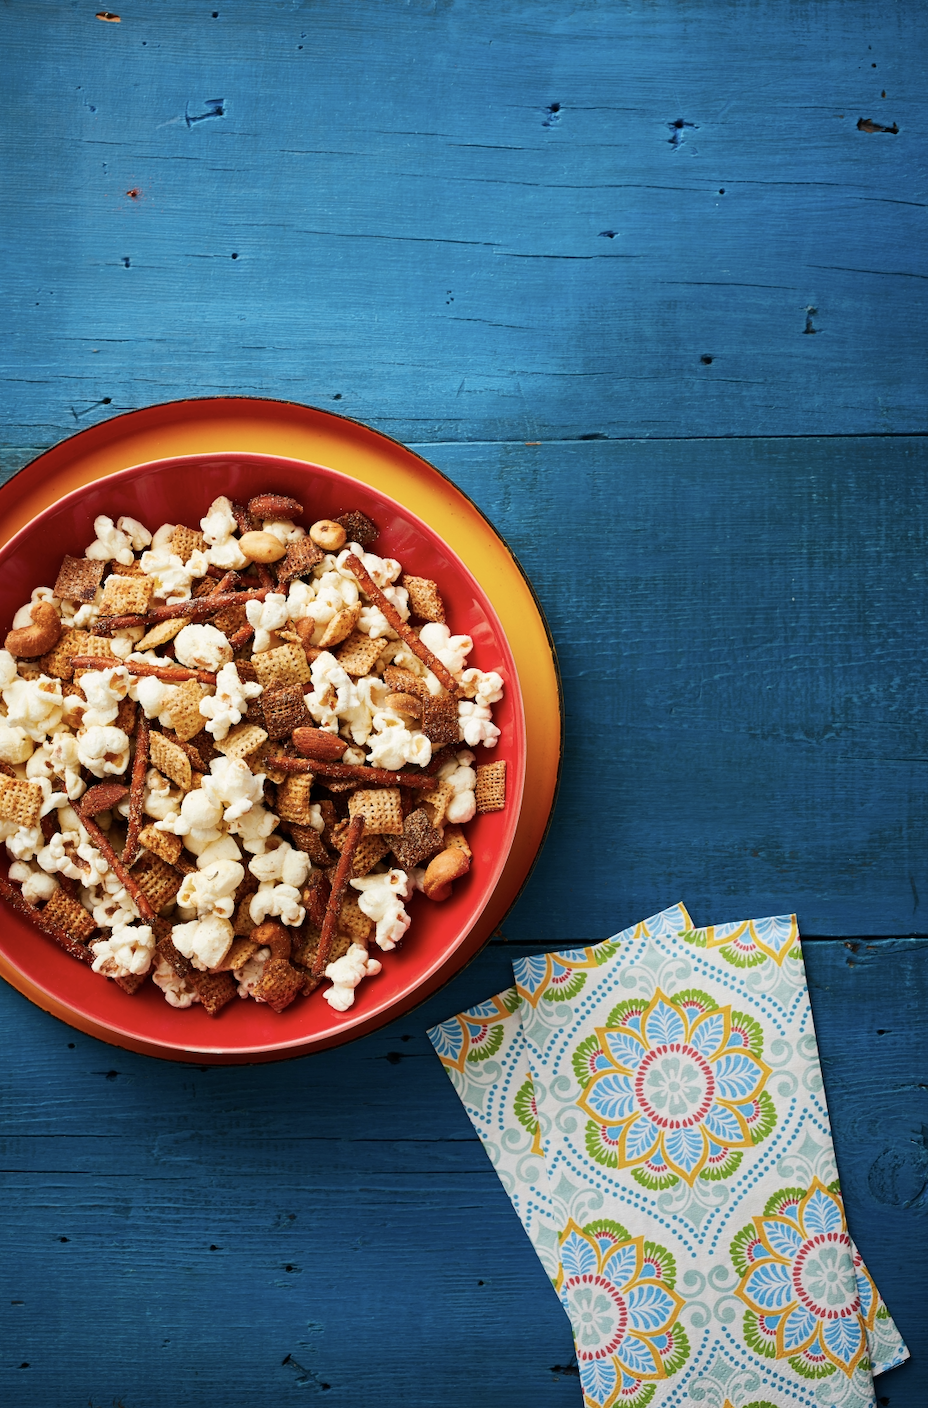 Popcorn Movie Snacks Board - The Perfect Film Watching Treats!